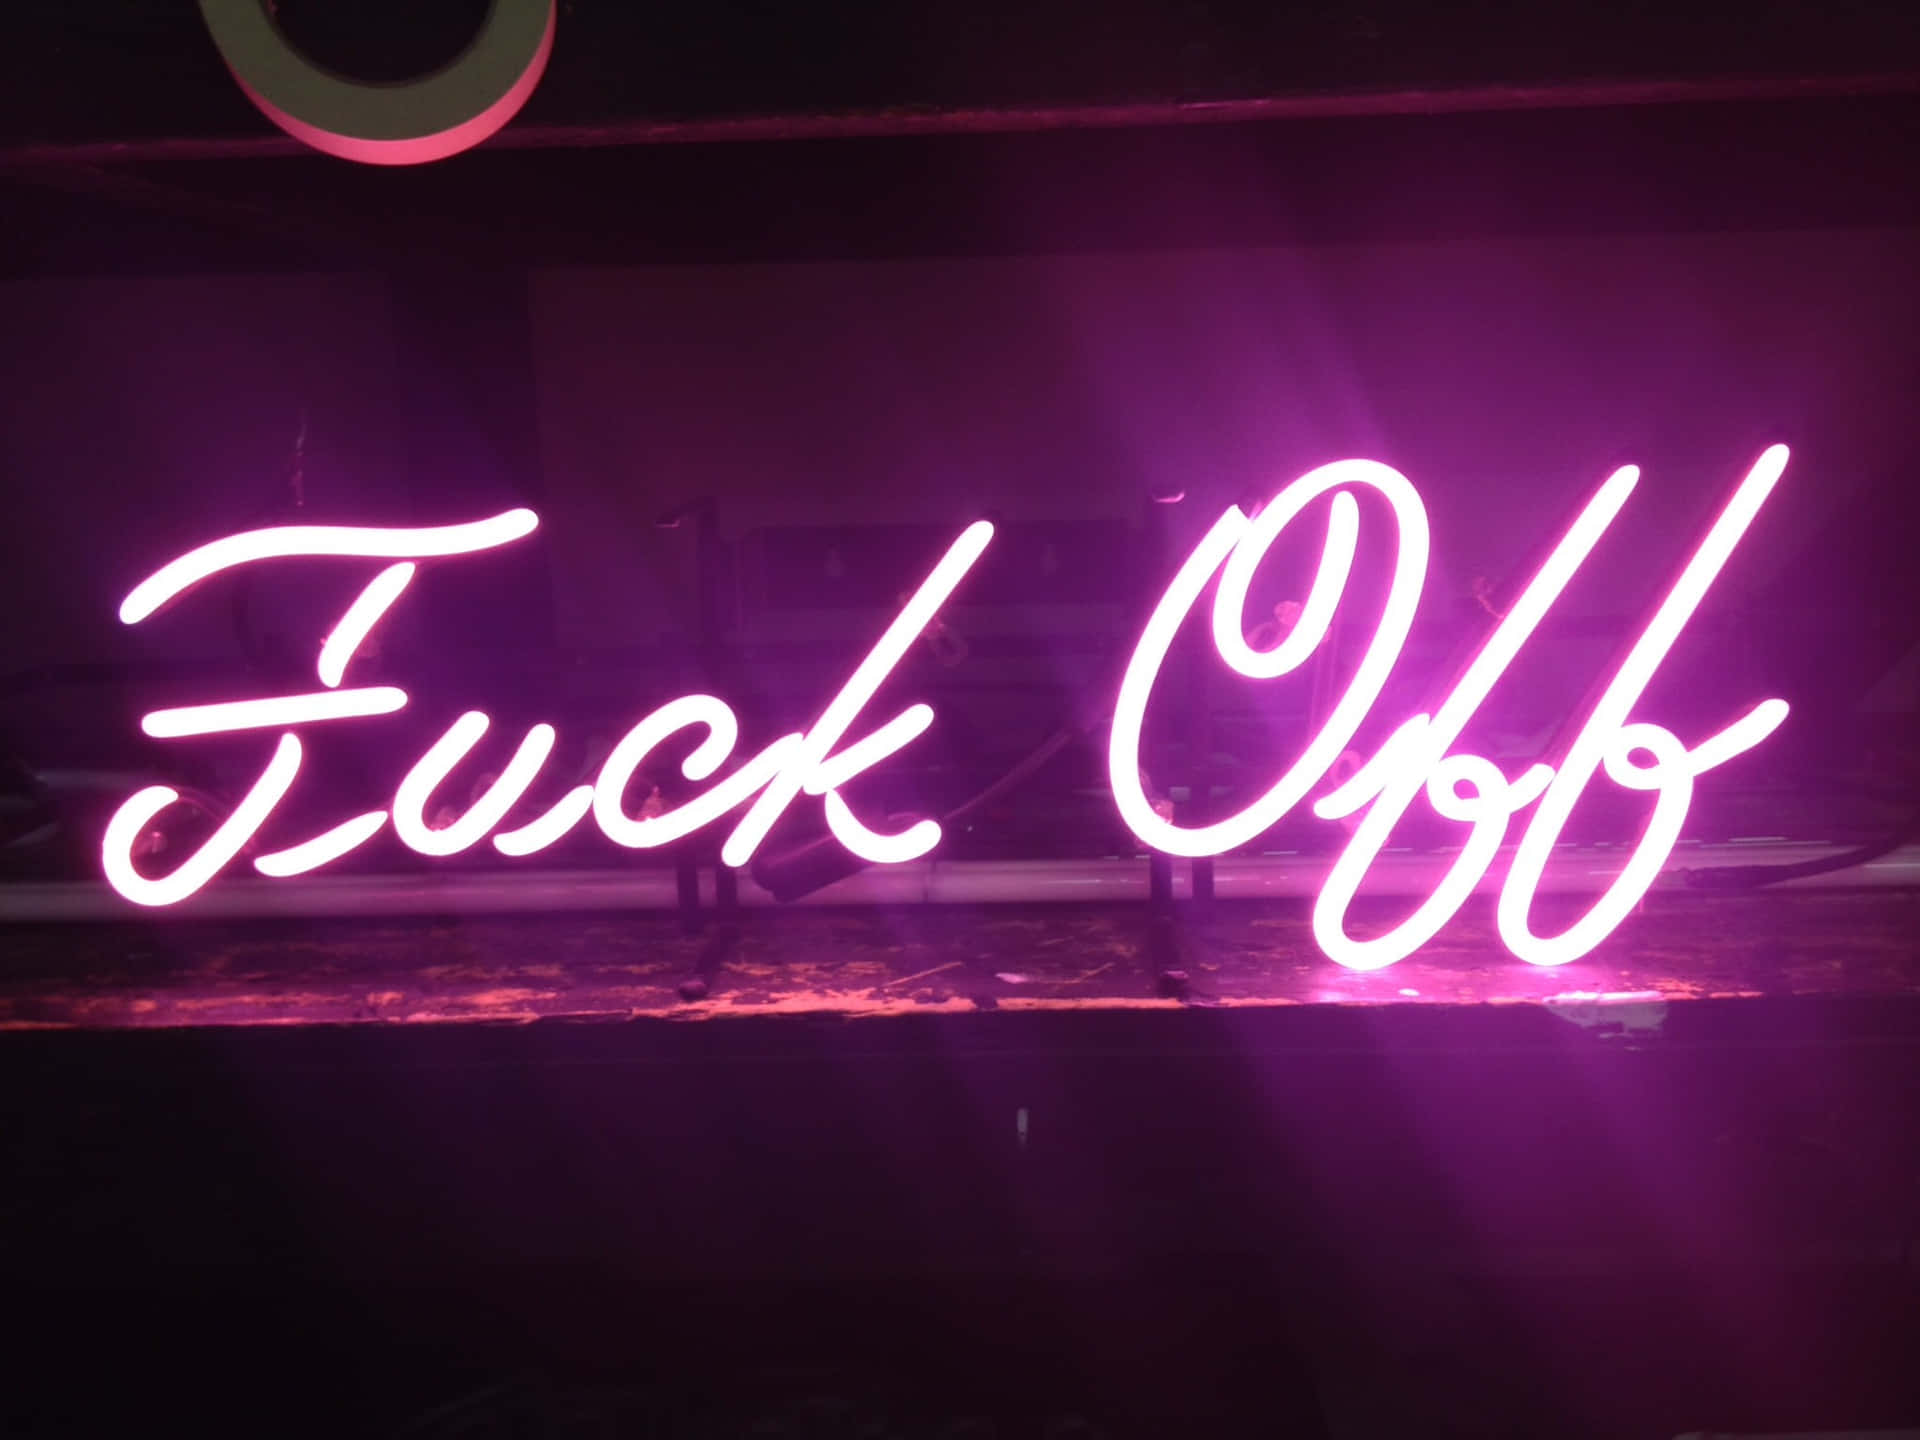 Illuminated Neon Sign in a Dark Environment